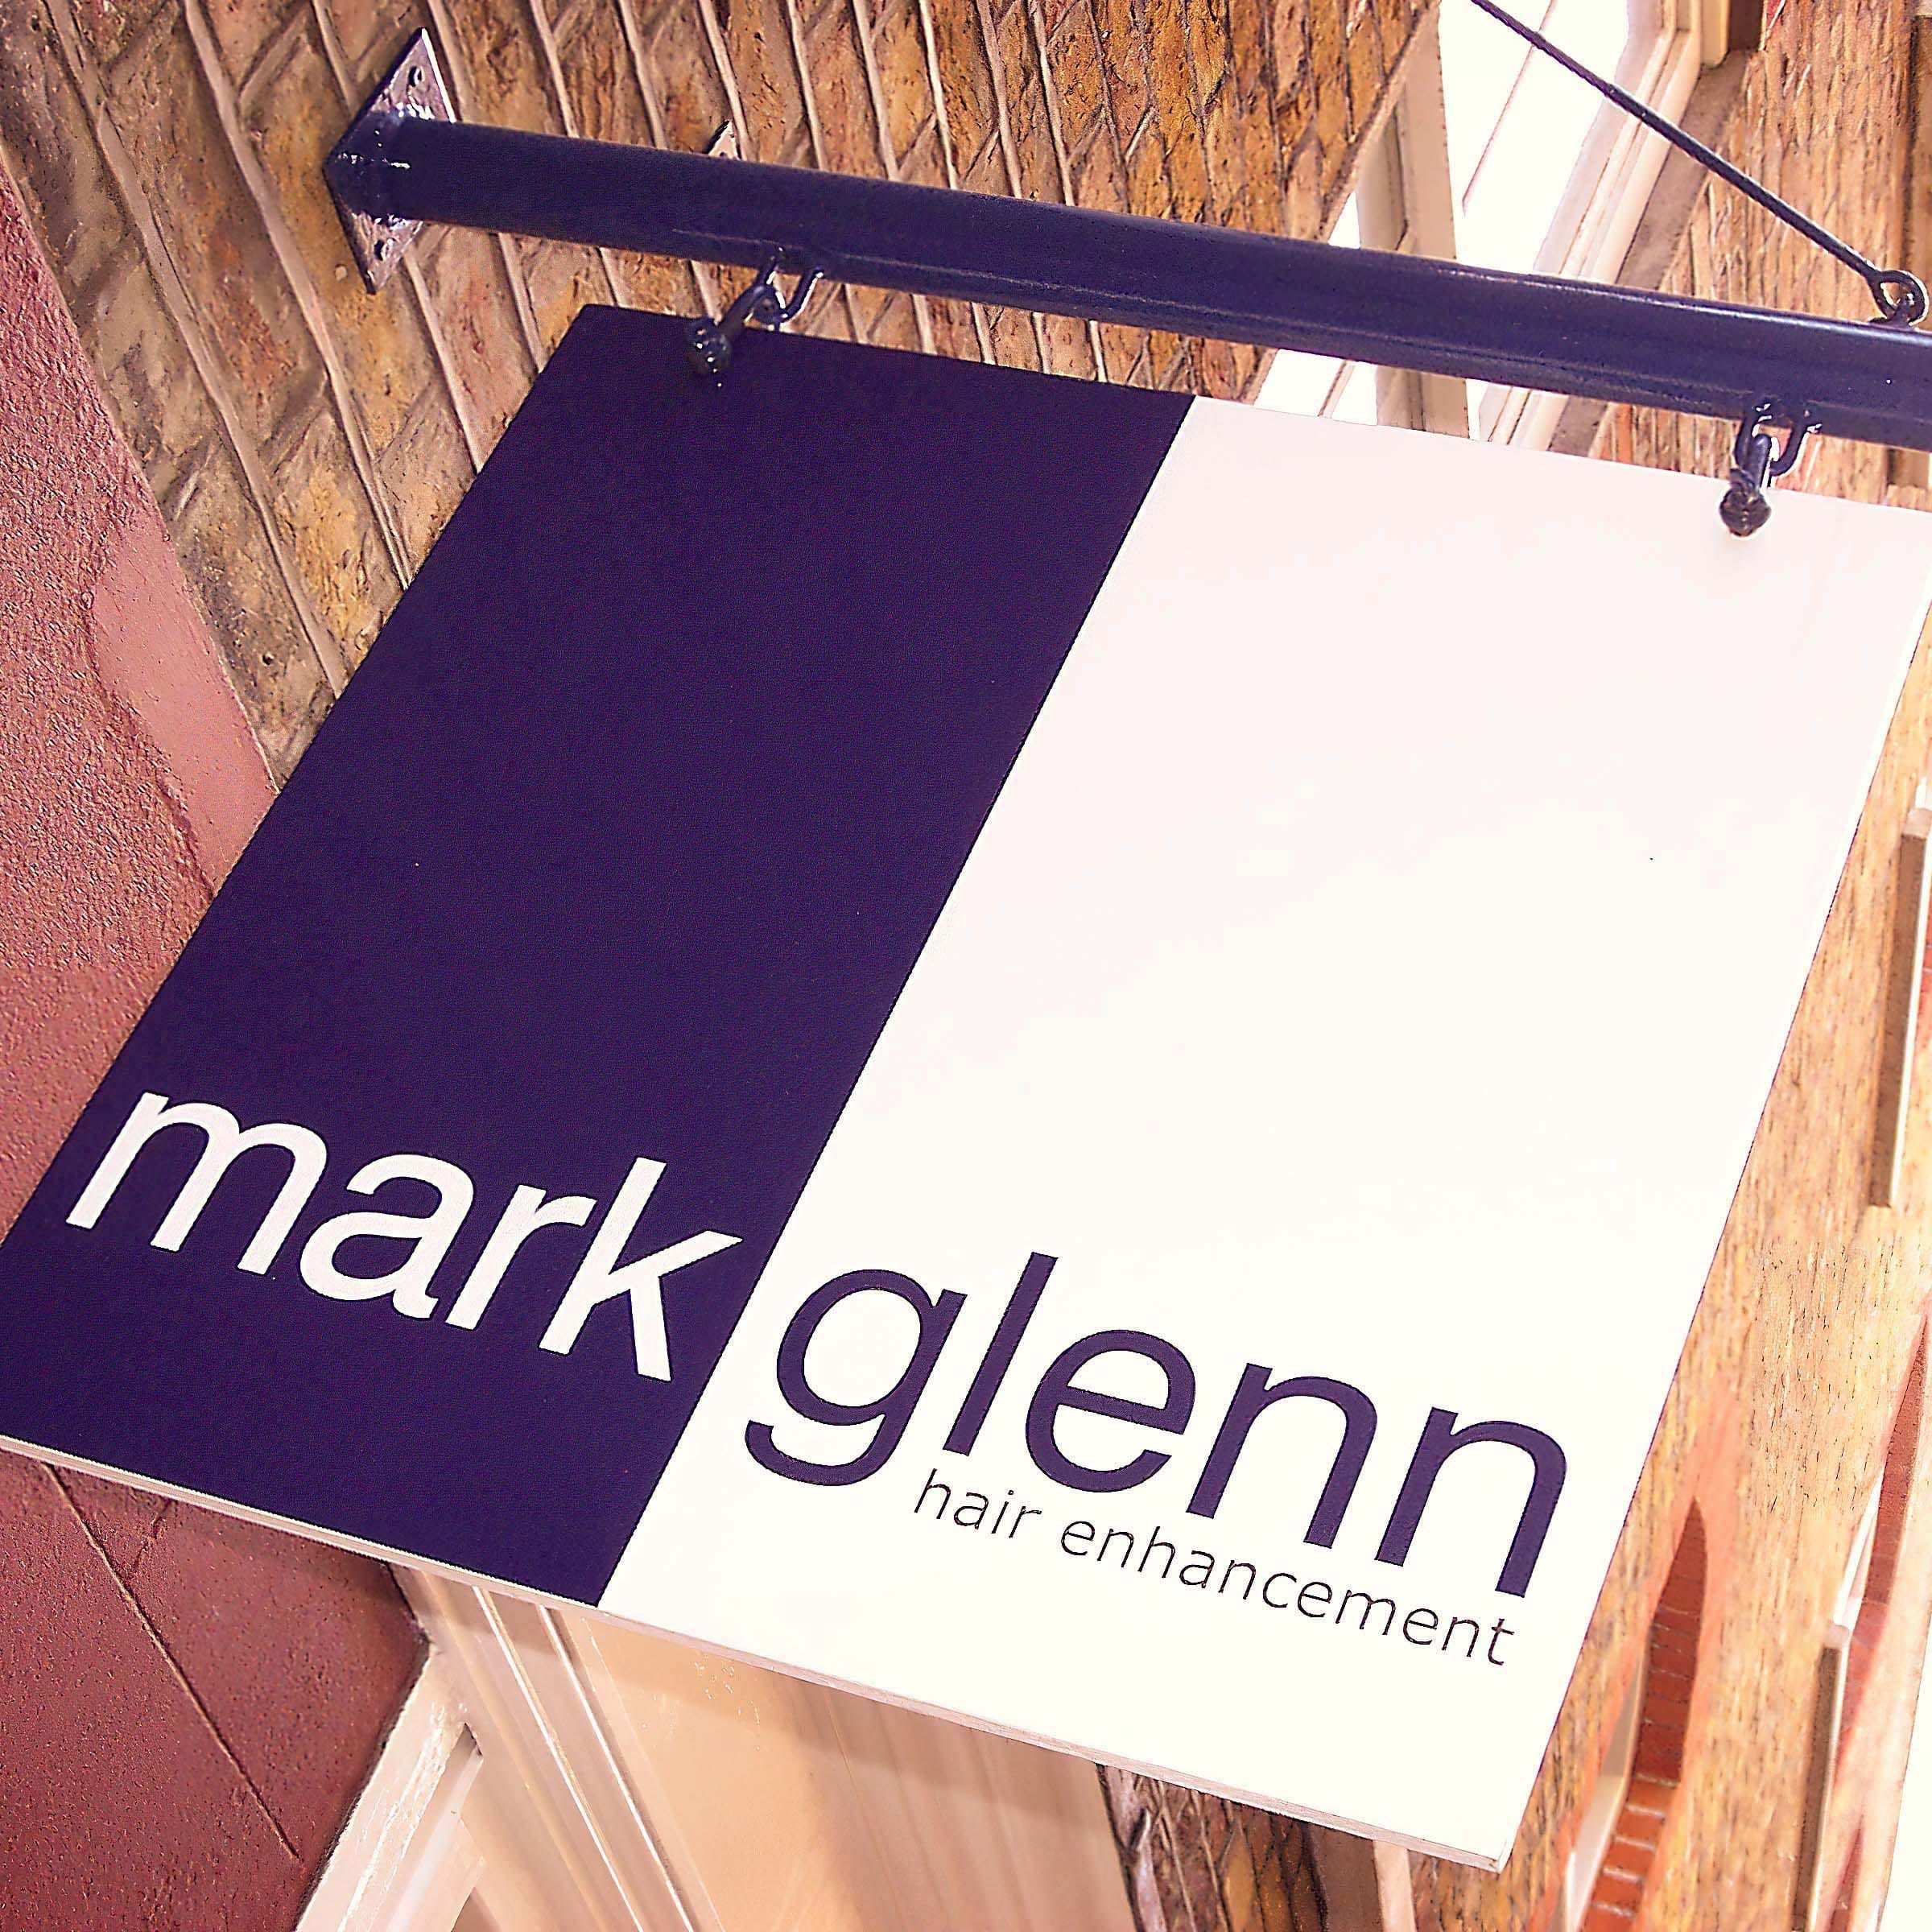 Exterior sign at Mark Glenn's first hair extension studio in London's New Bond Street, 2001